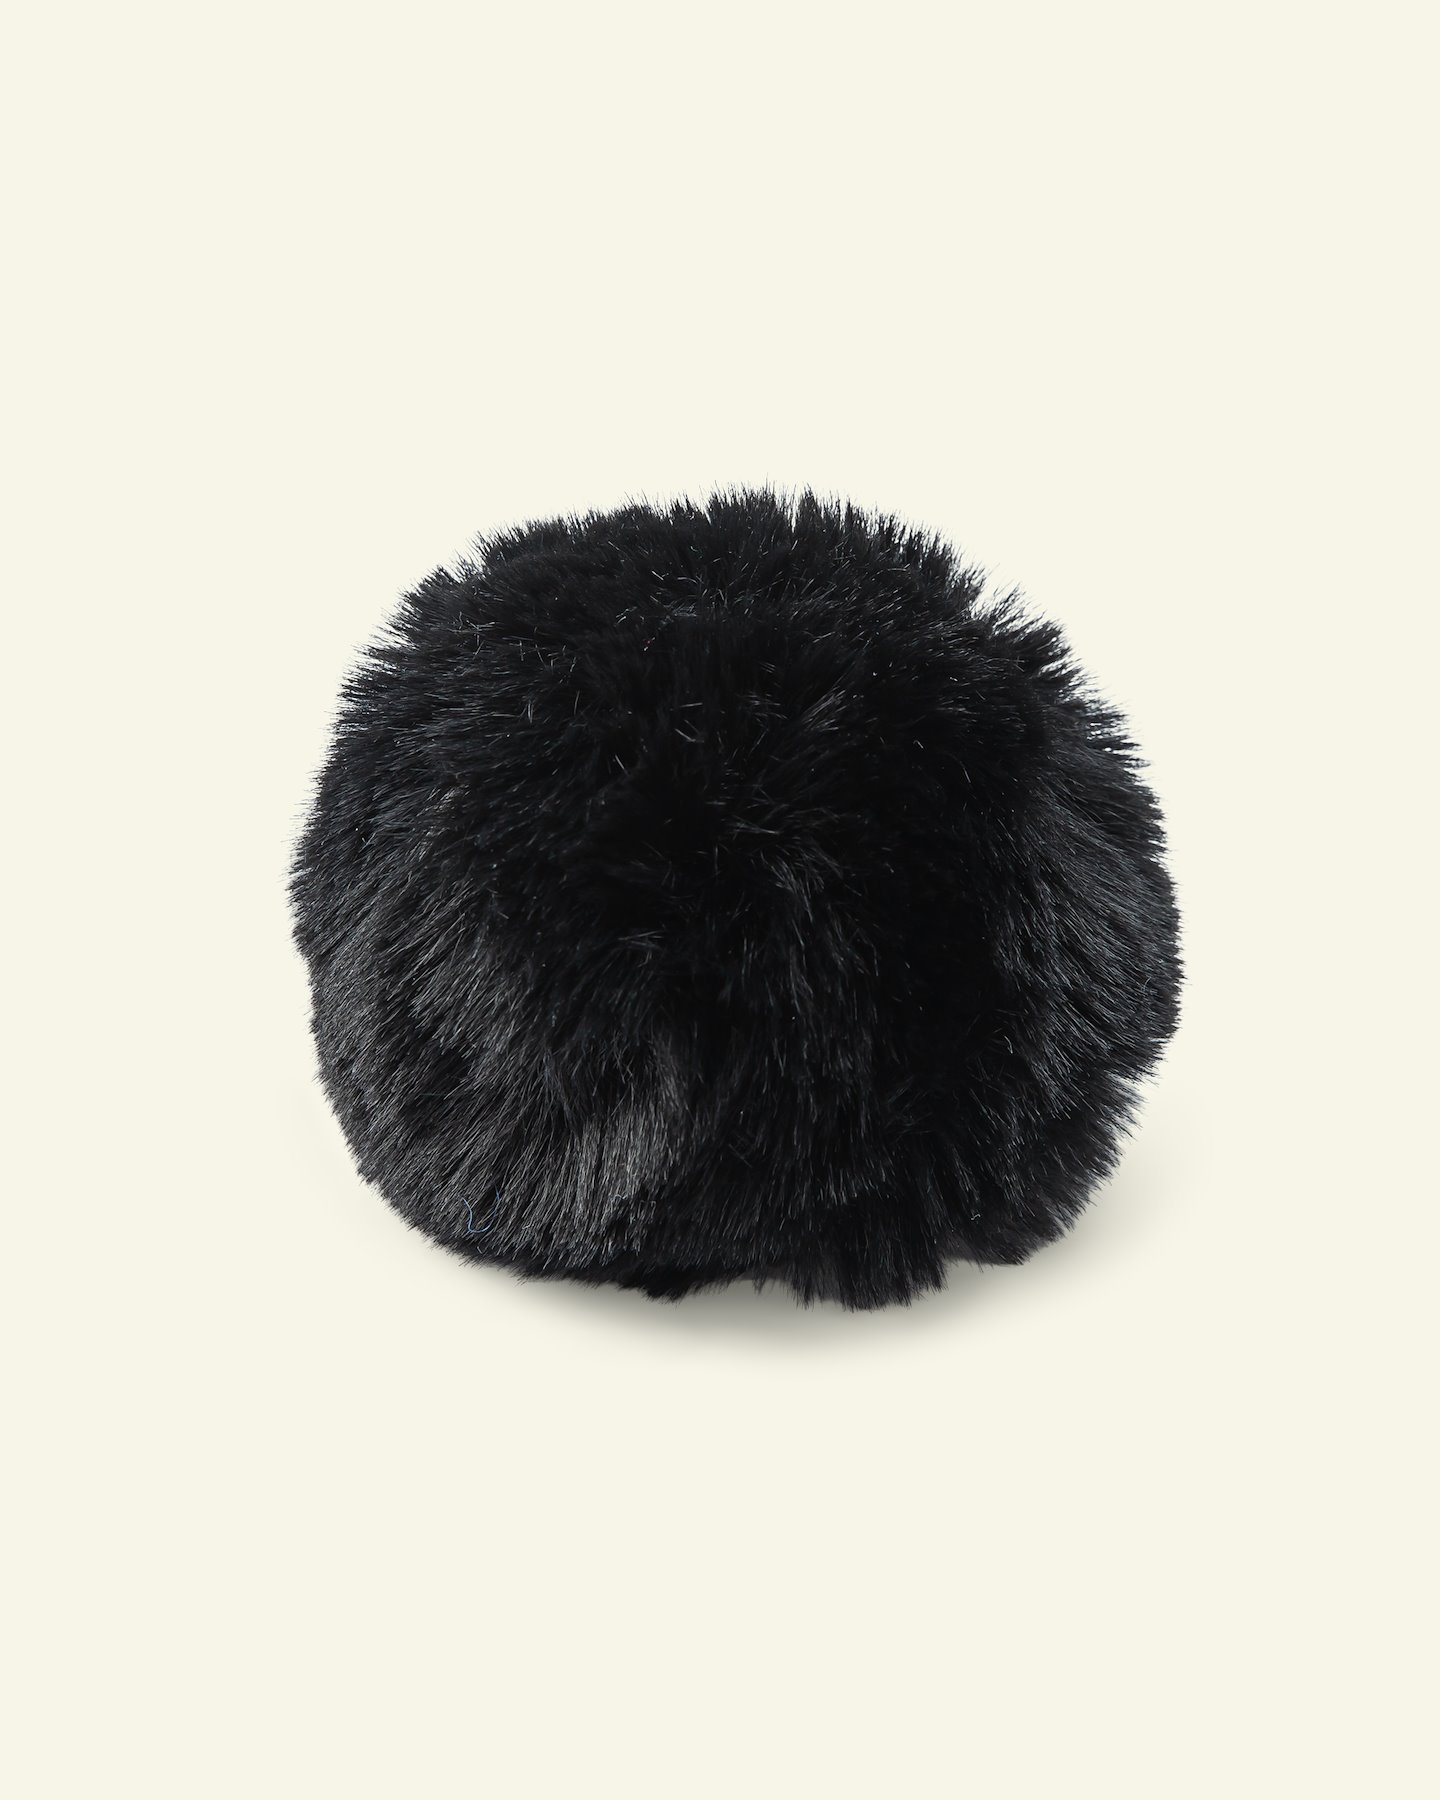 Pompon w/elastic 10cm fake fur black 21503_pack